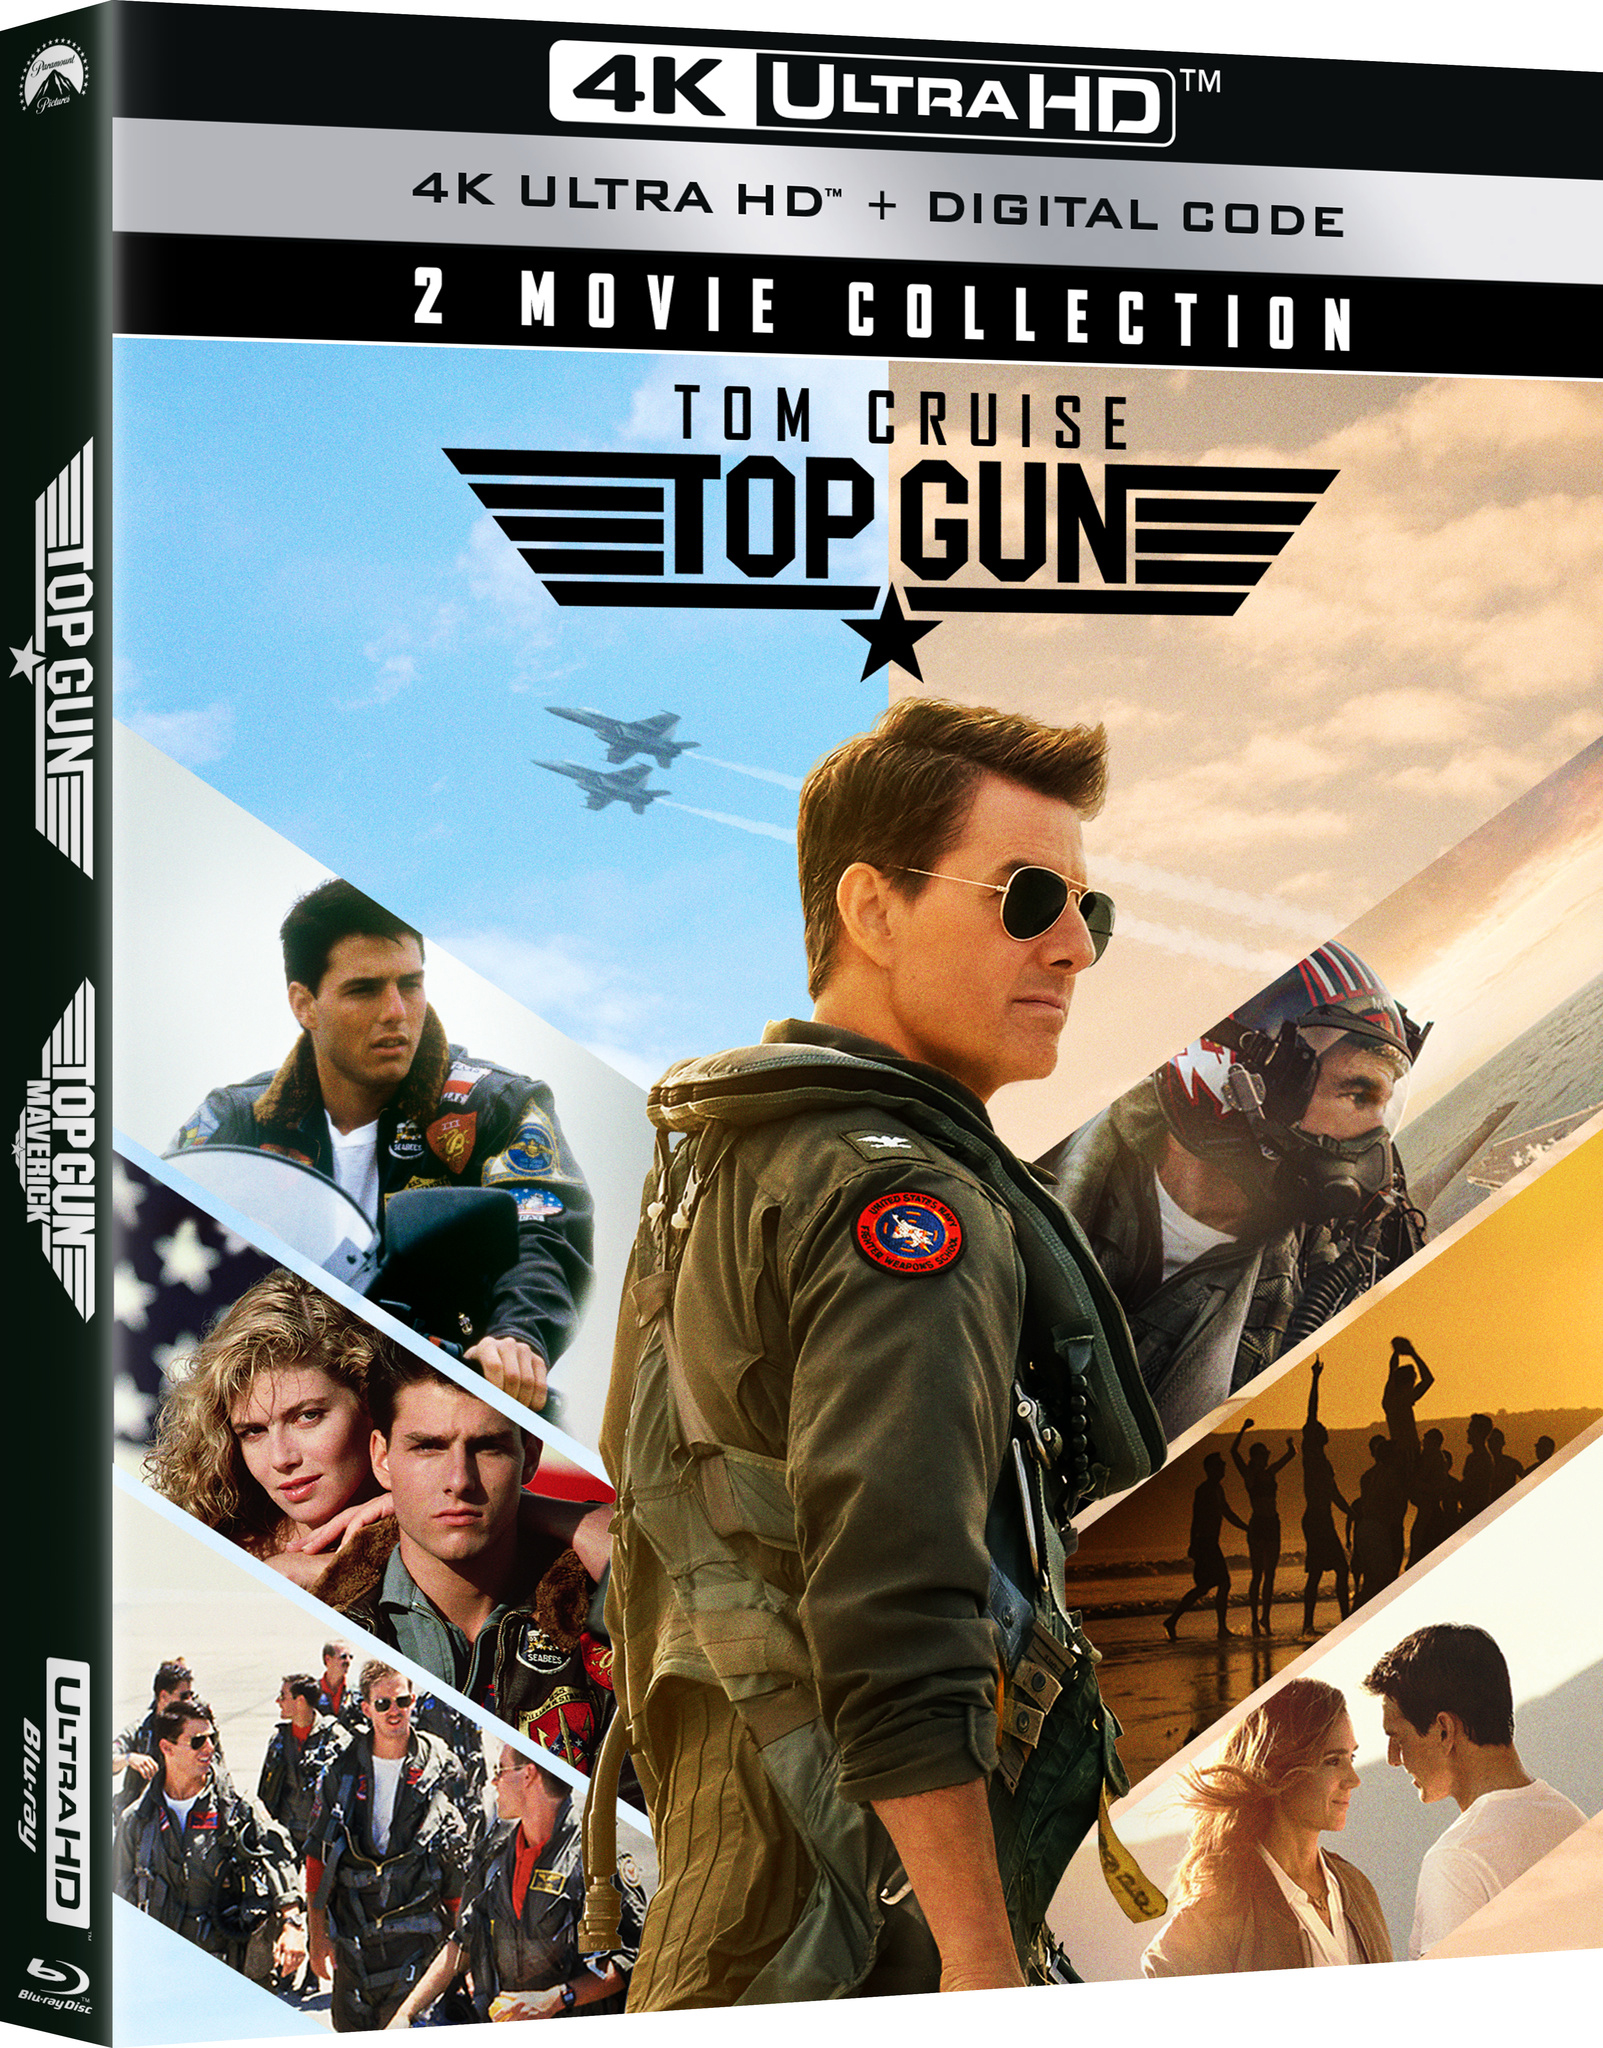 Top Gun 2-Movie Collection [Includes Digital Copy] [4K Ultra HD Blu-ray]